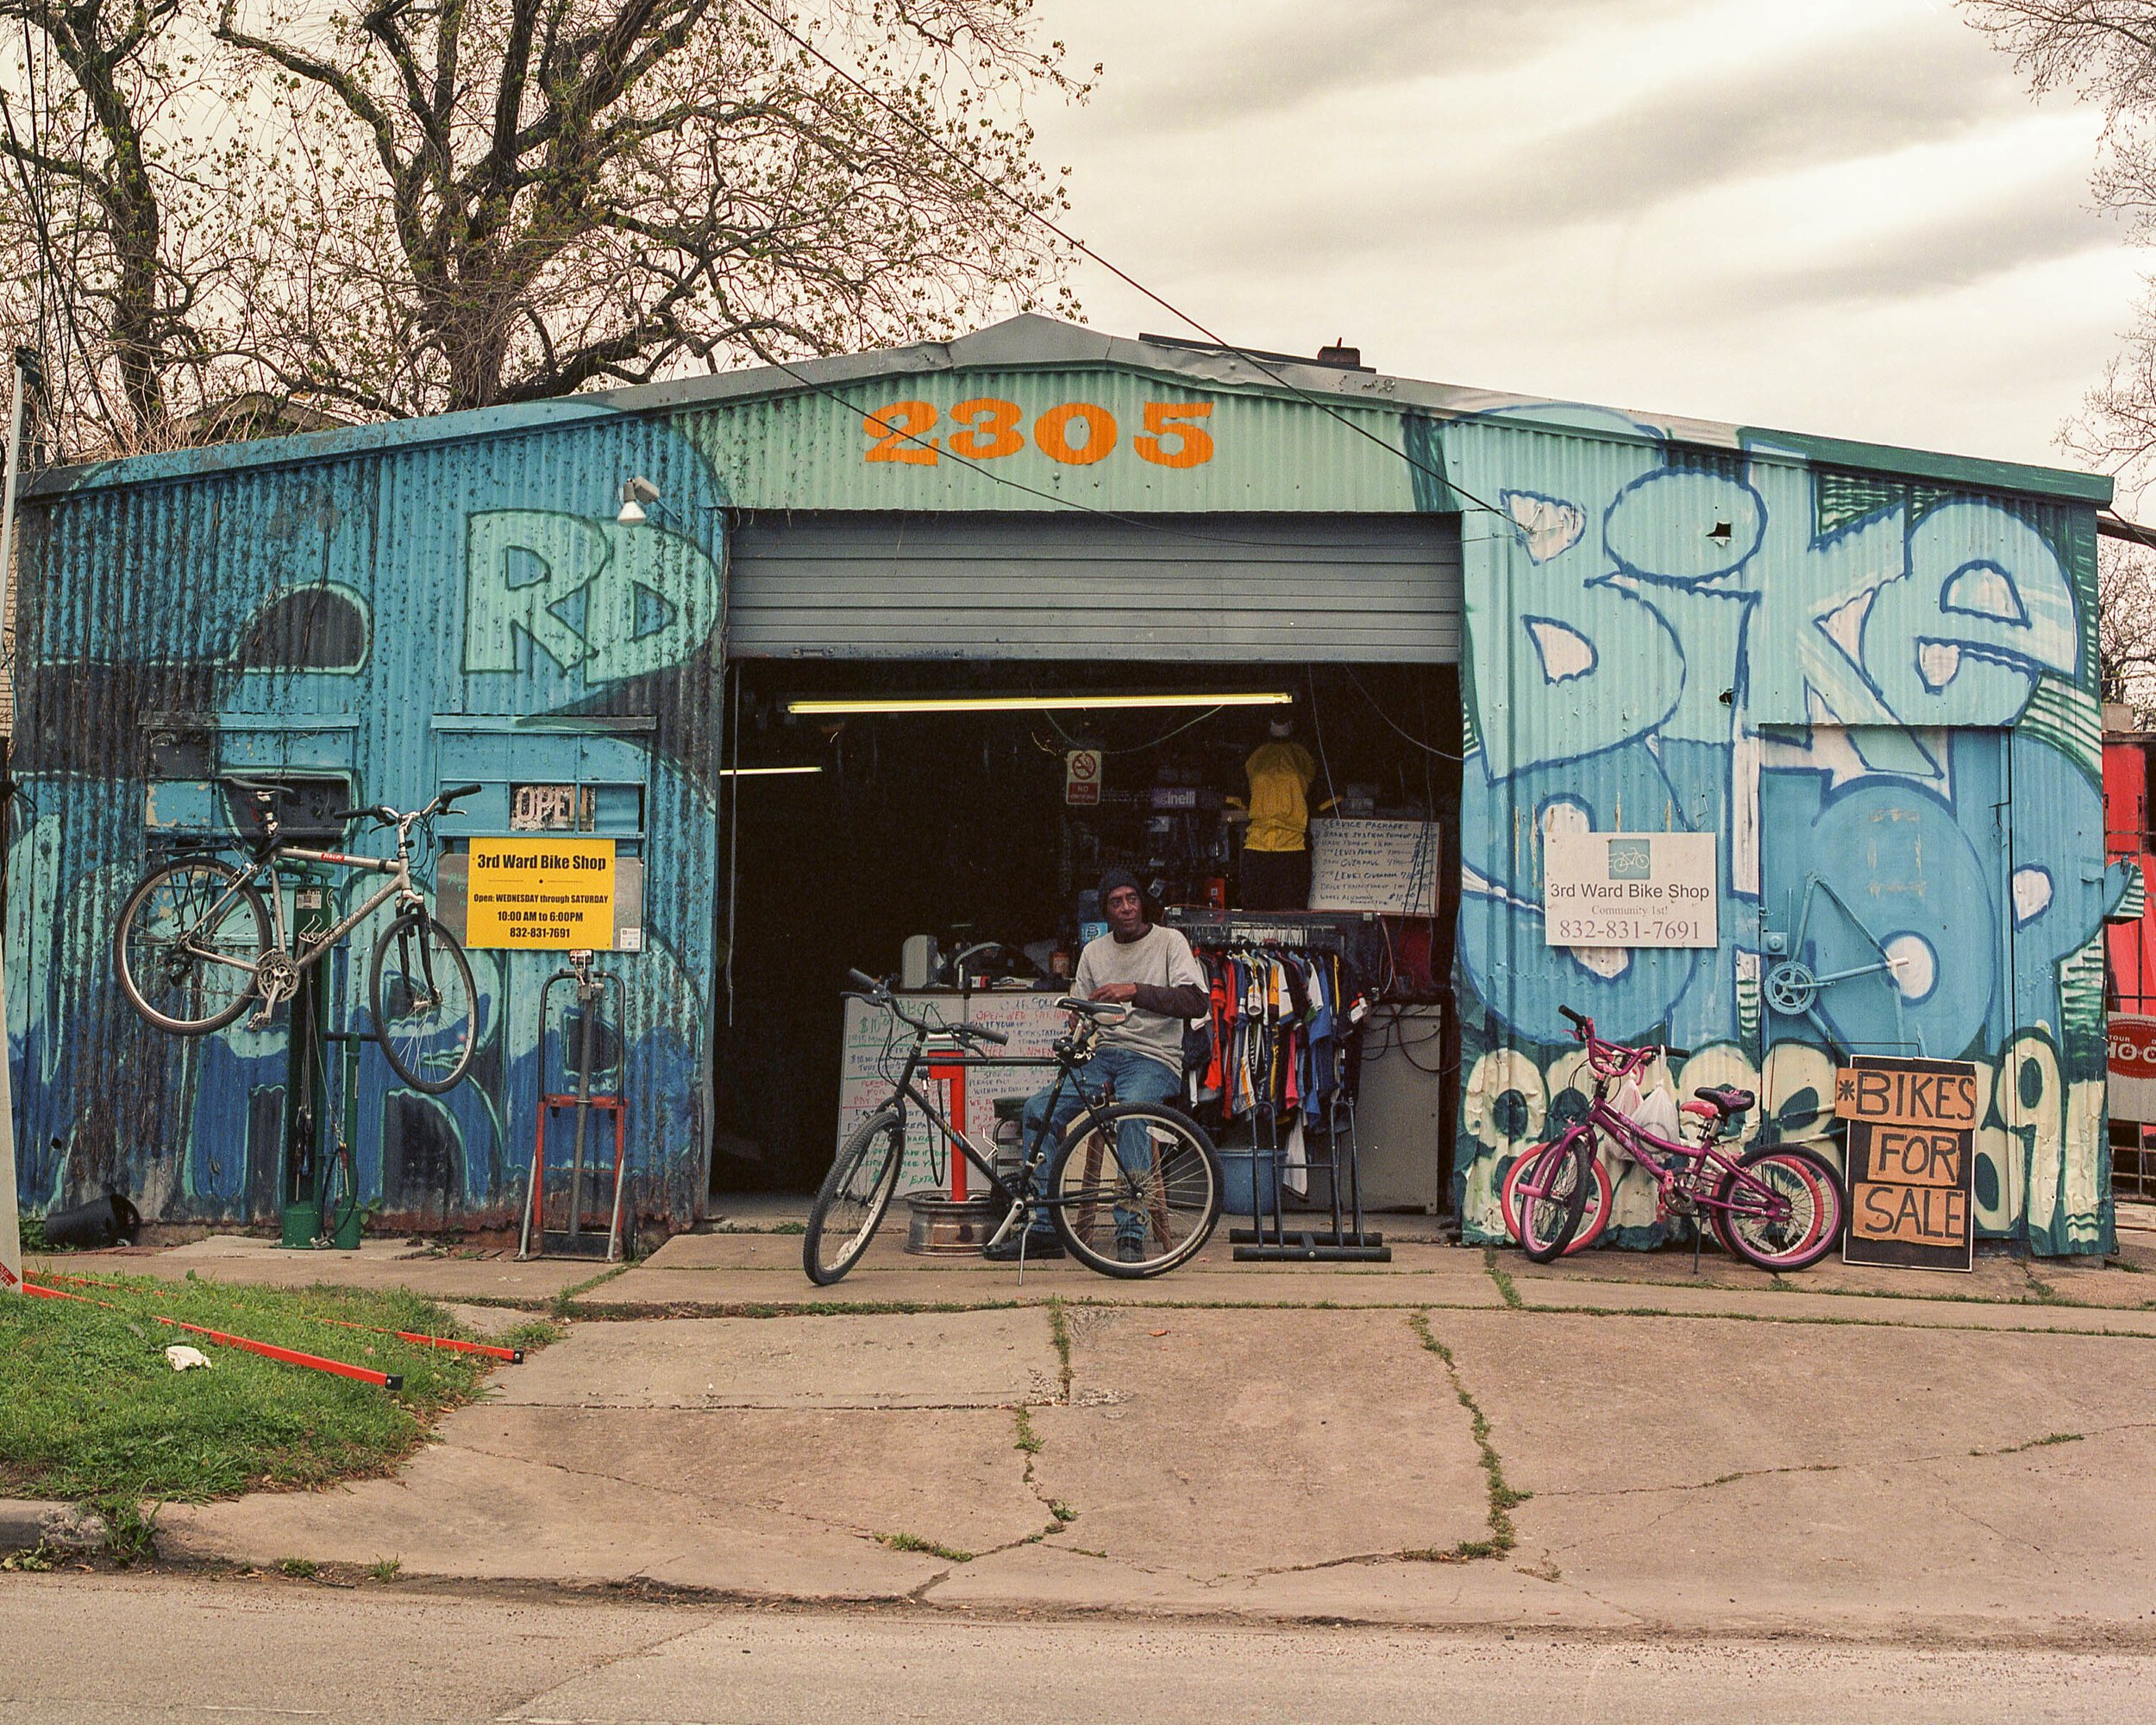 3rd ward bike shop - Copy.jpg